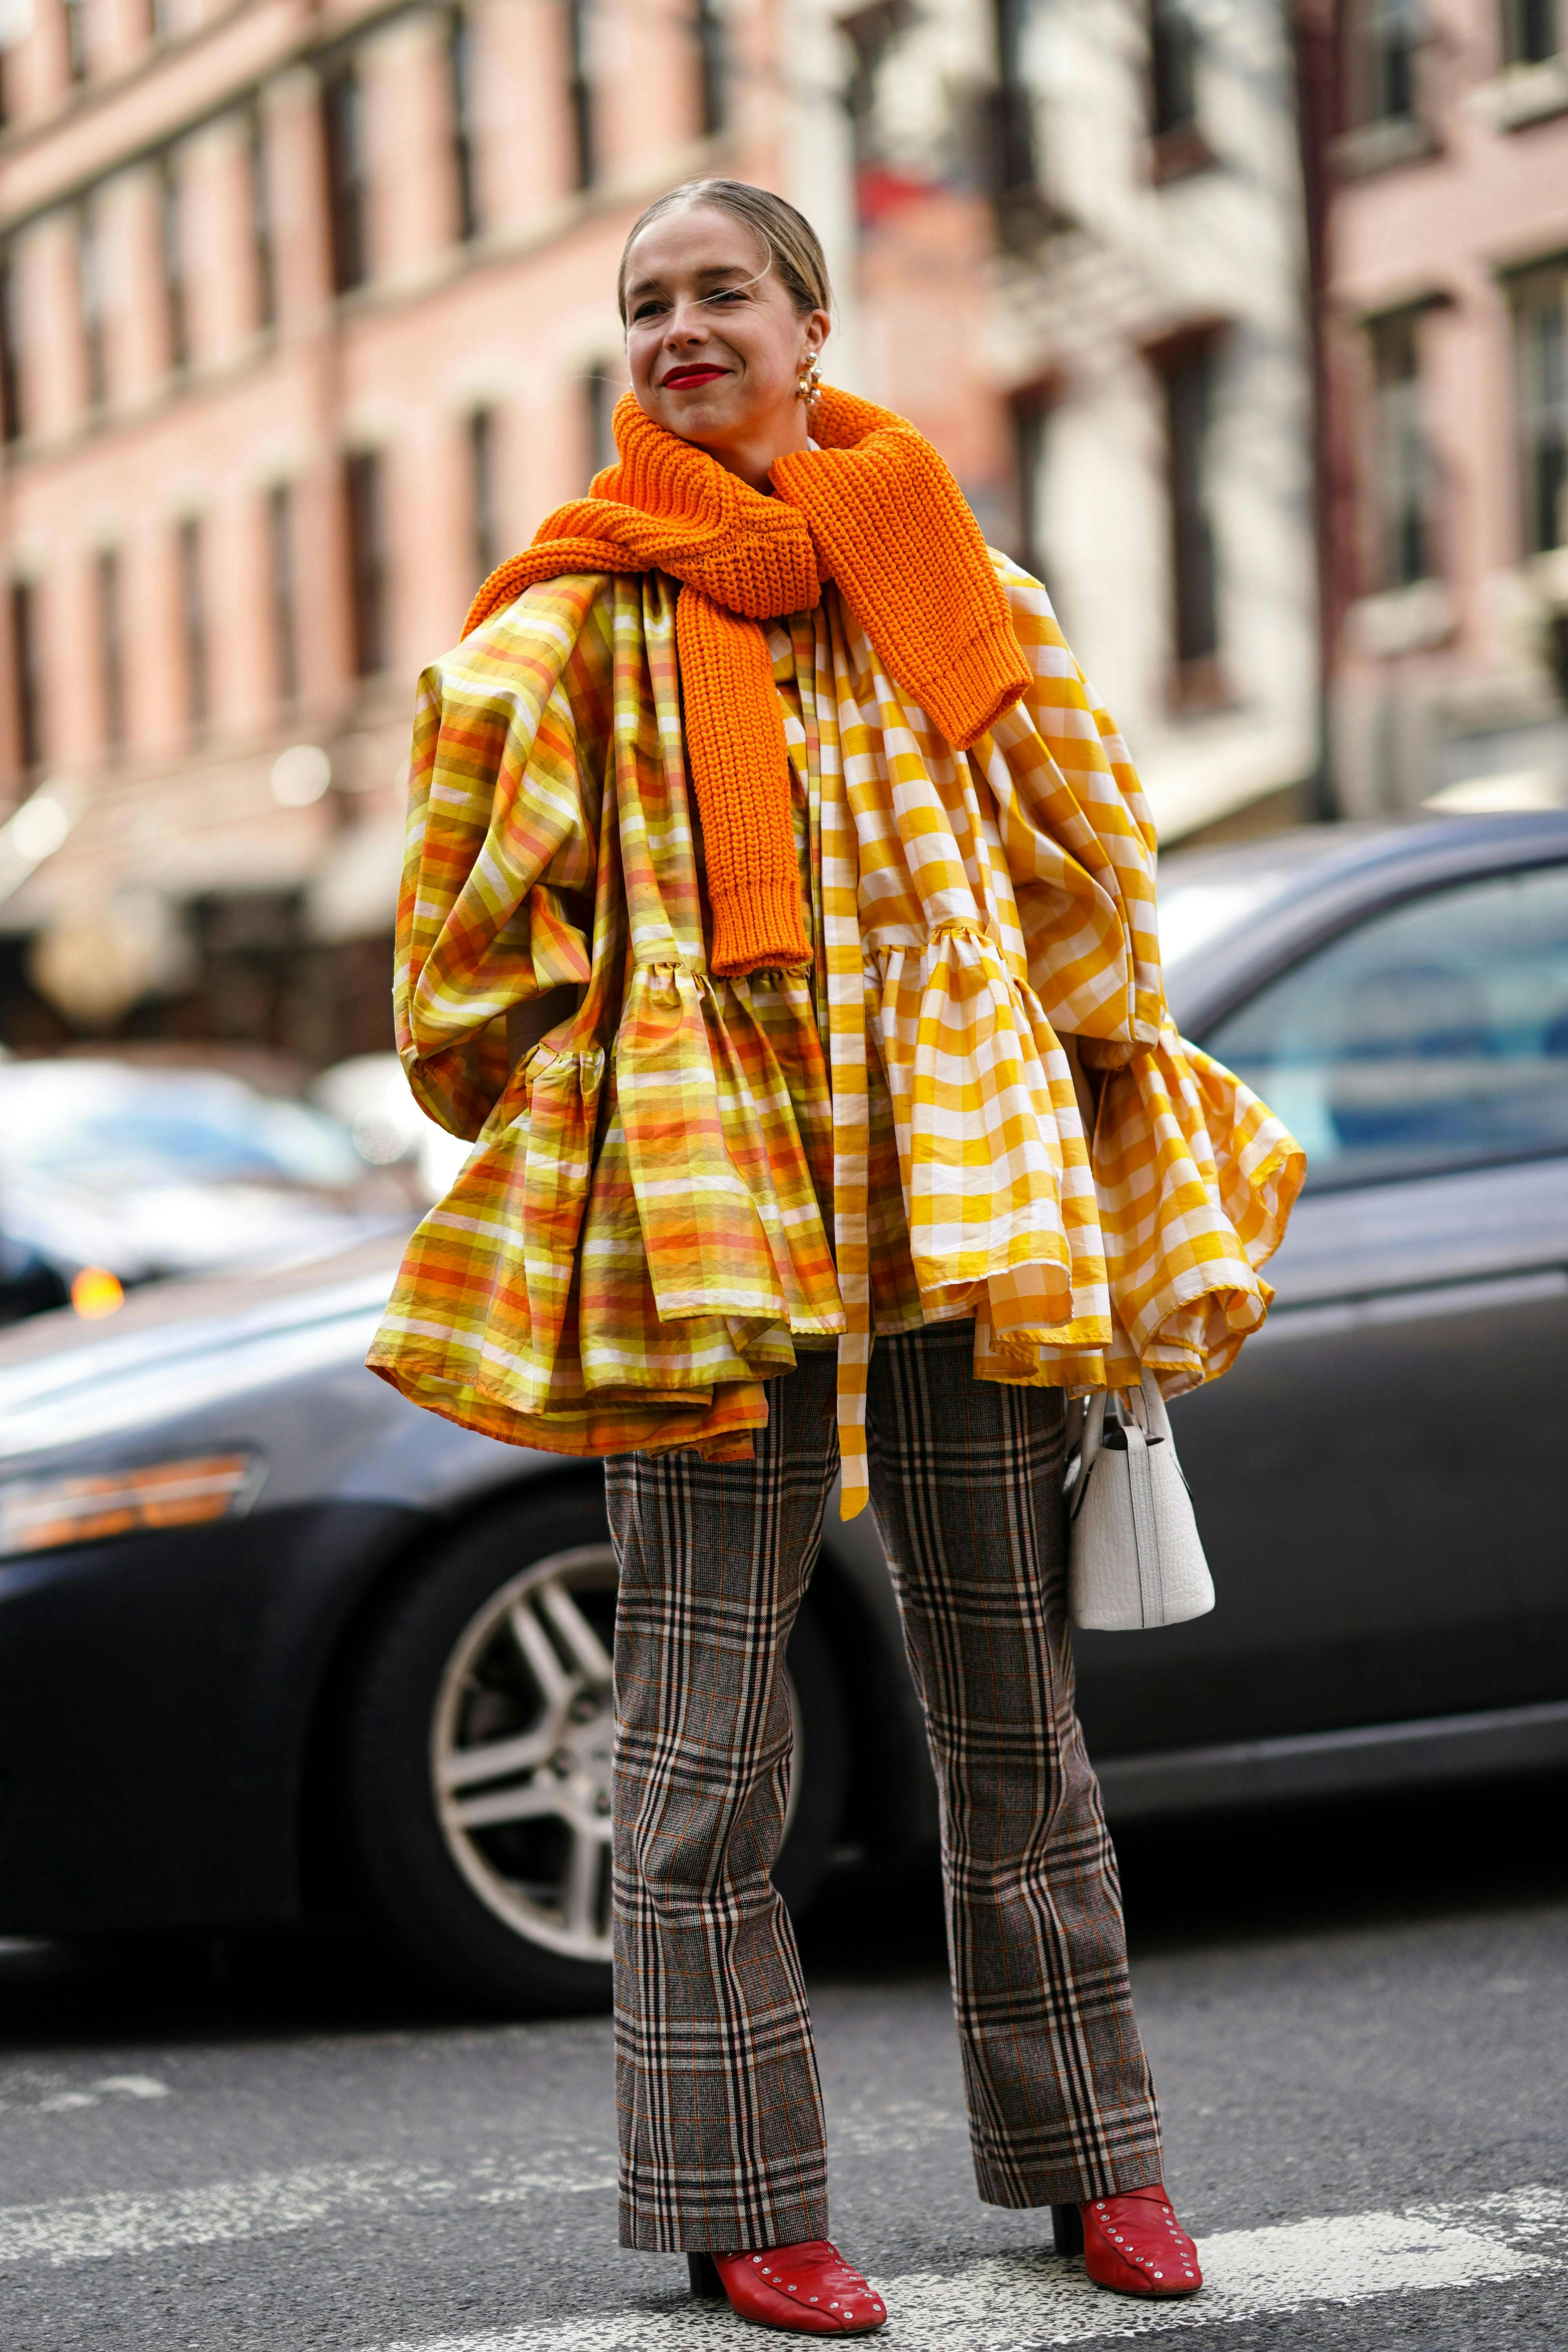 woman bestof topix new york clothing coat bag handbag scarf smile pants alloy wheel spoke purse